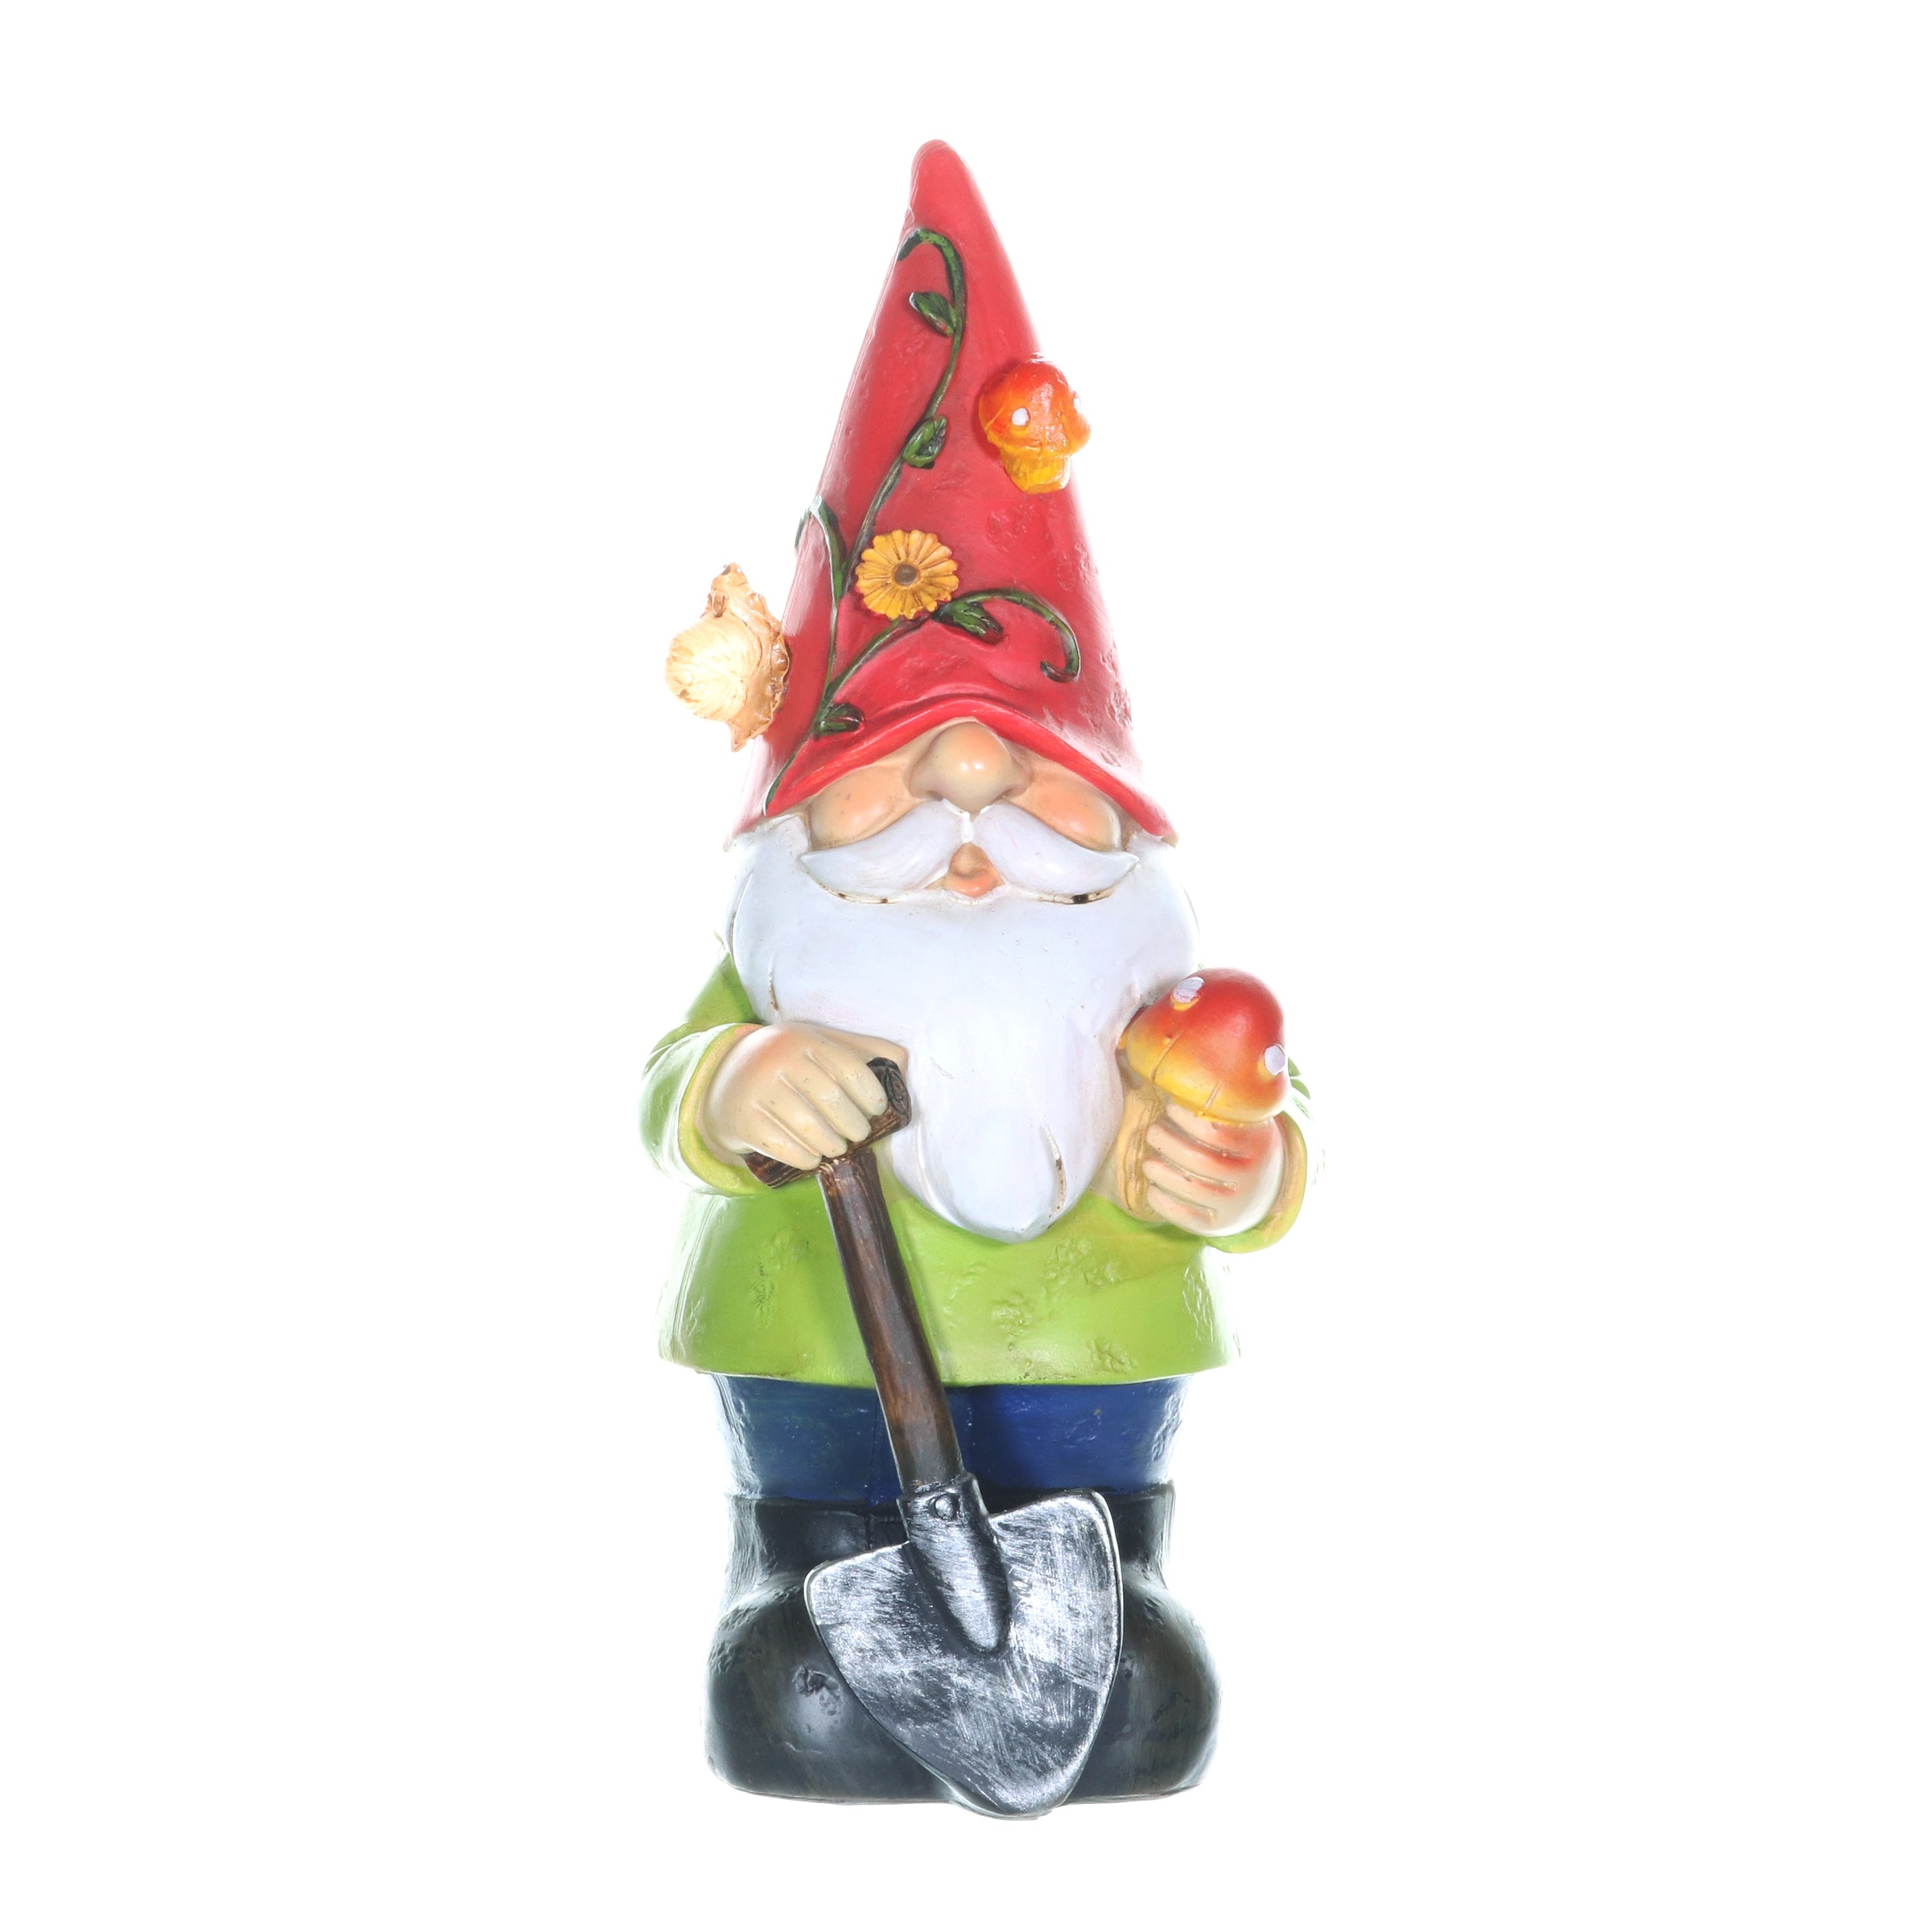 Solar Red Hat Roy Garden Gnome Statue with Shovel, 10 Inch | Shop Garden Decor by Exhart